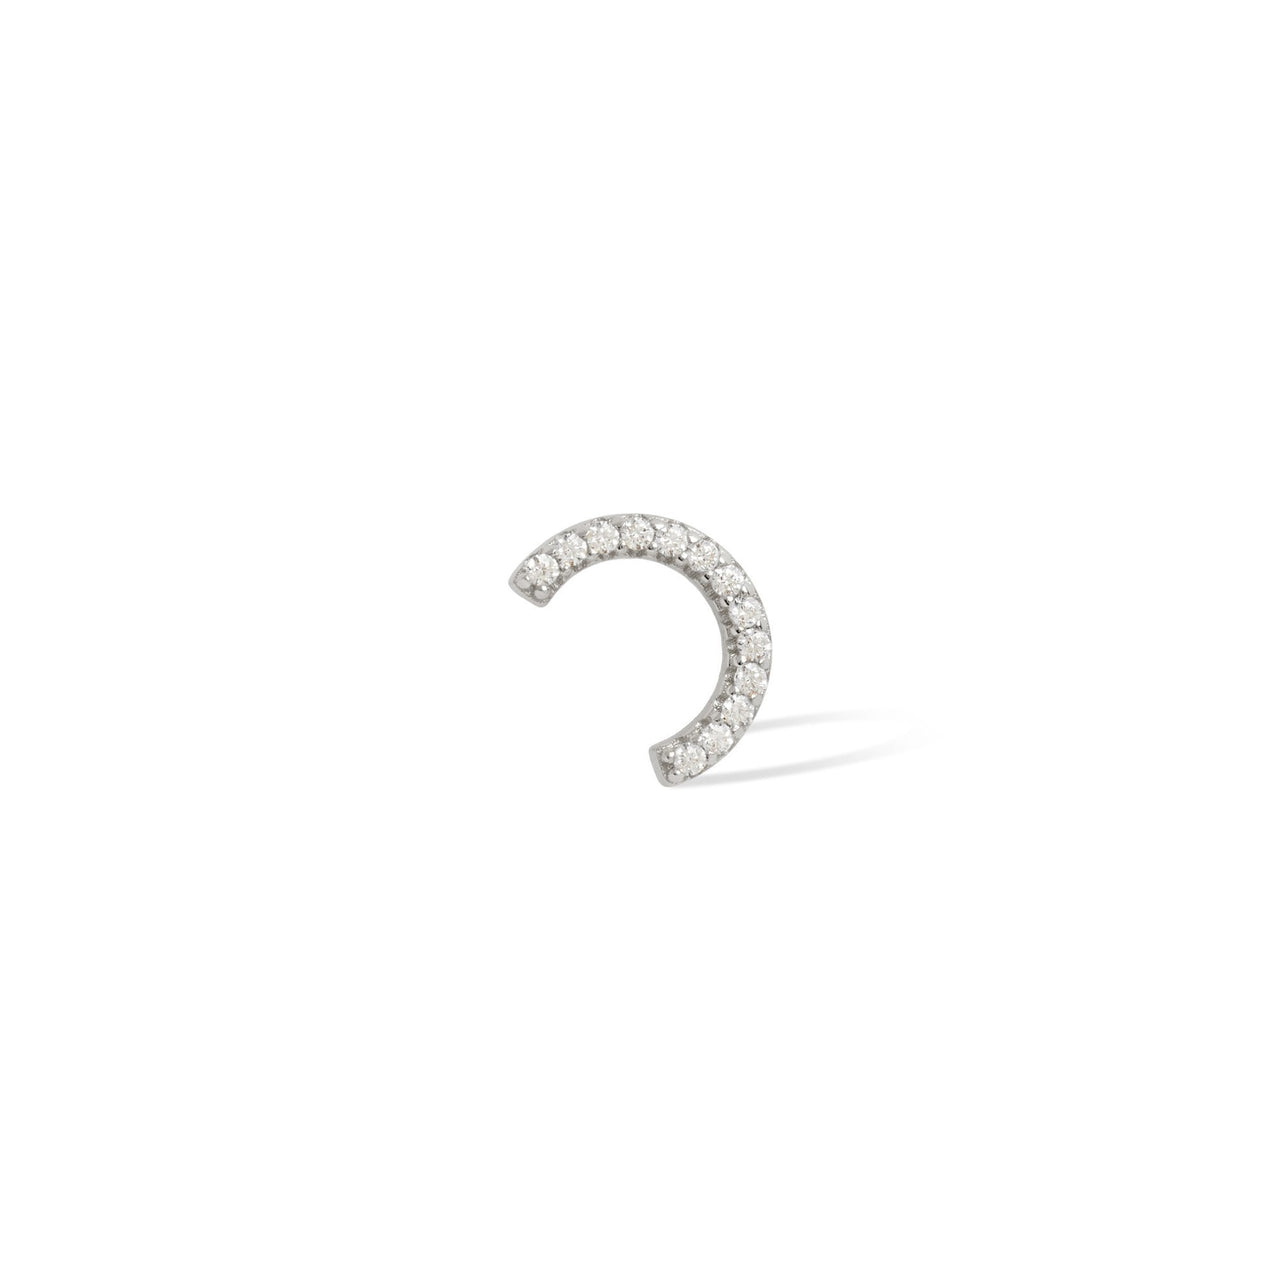 Single earring Half circle sterling silver stud (ball screw)